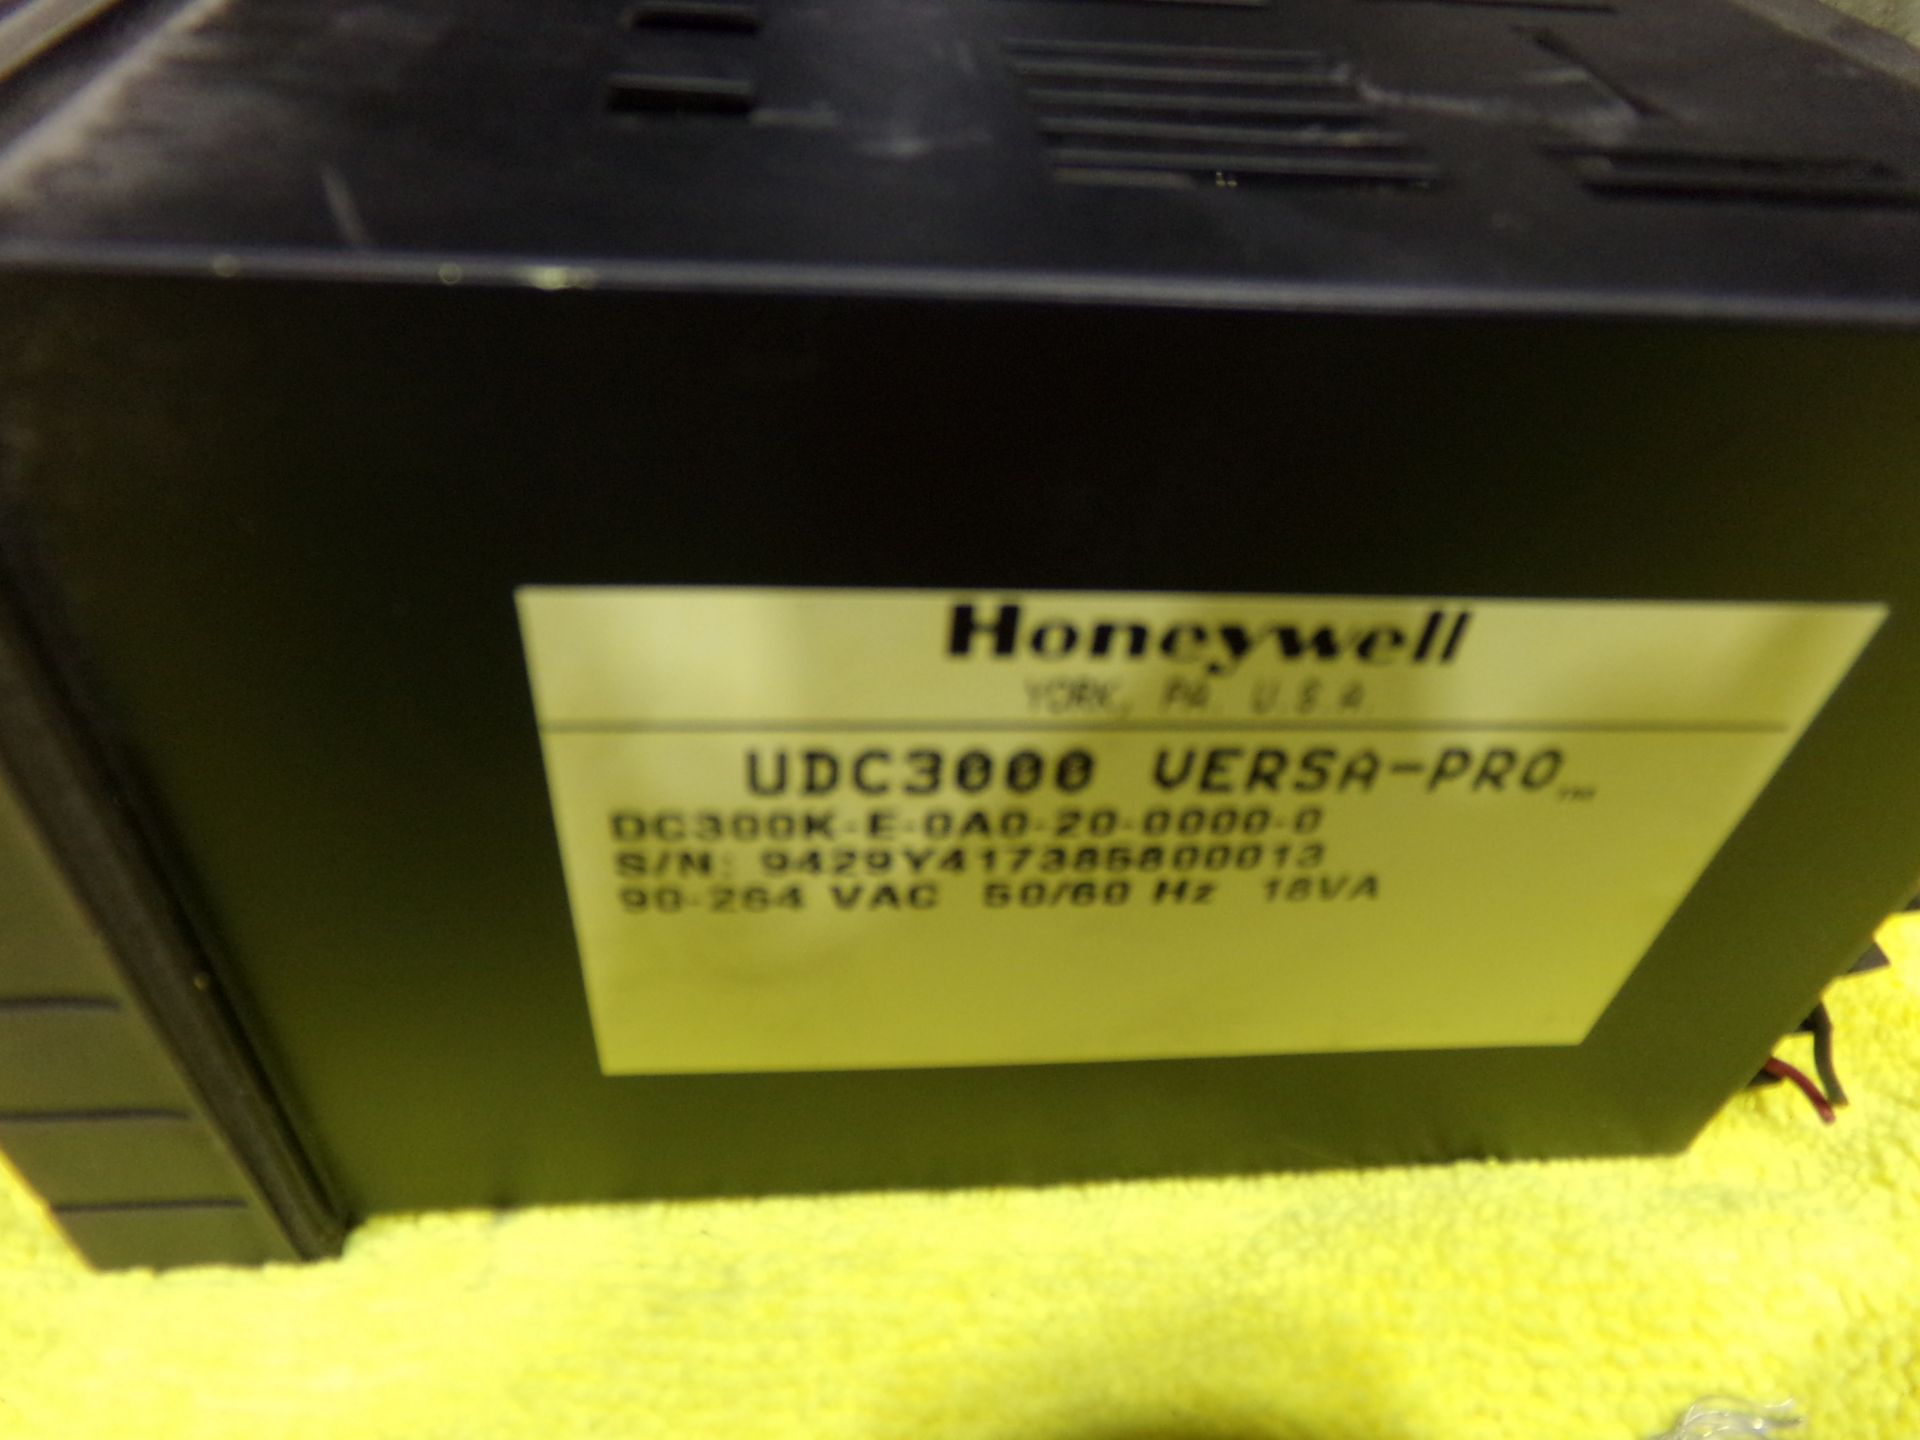 HONEYWELL DIGITAL CONTROLLER UDC3000 VERSA-PRO C300K-E-0A0-20-0000-0 90-264 VAC 50/60HZ 18VA LOT - Image 8 of 9